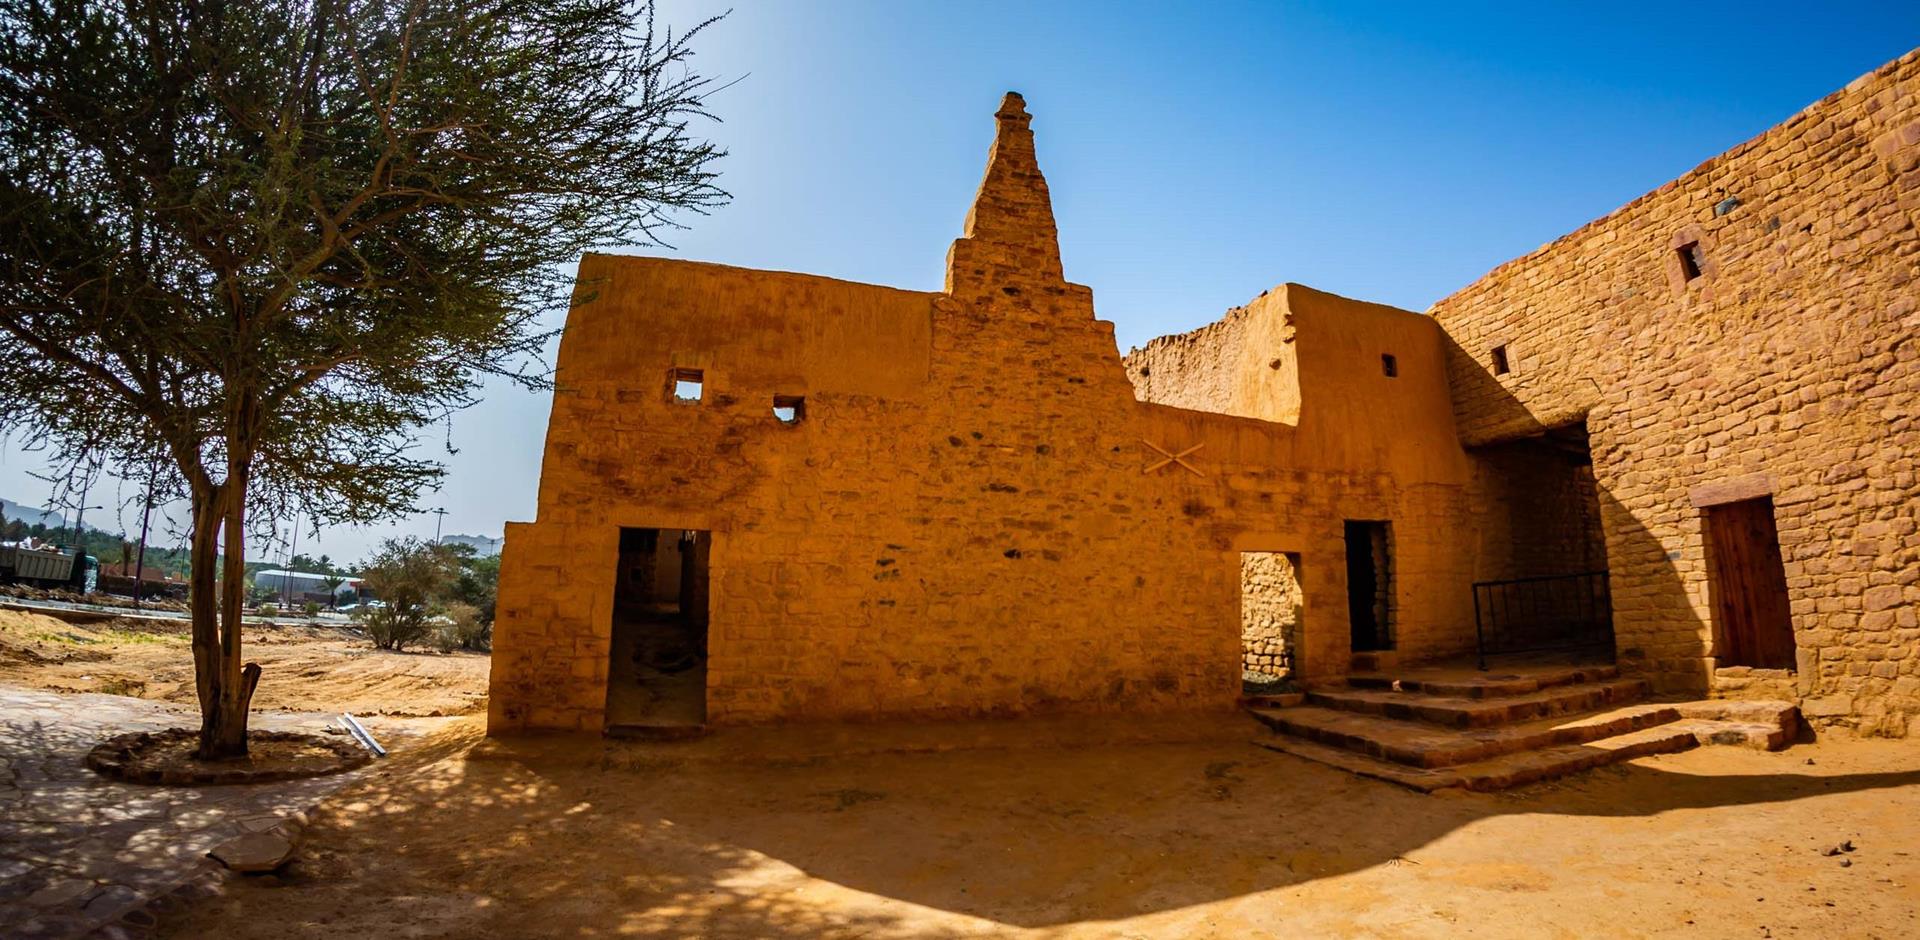 The Old Town of AlUla, Saudi Arabia